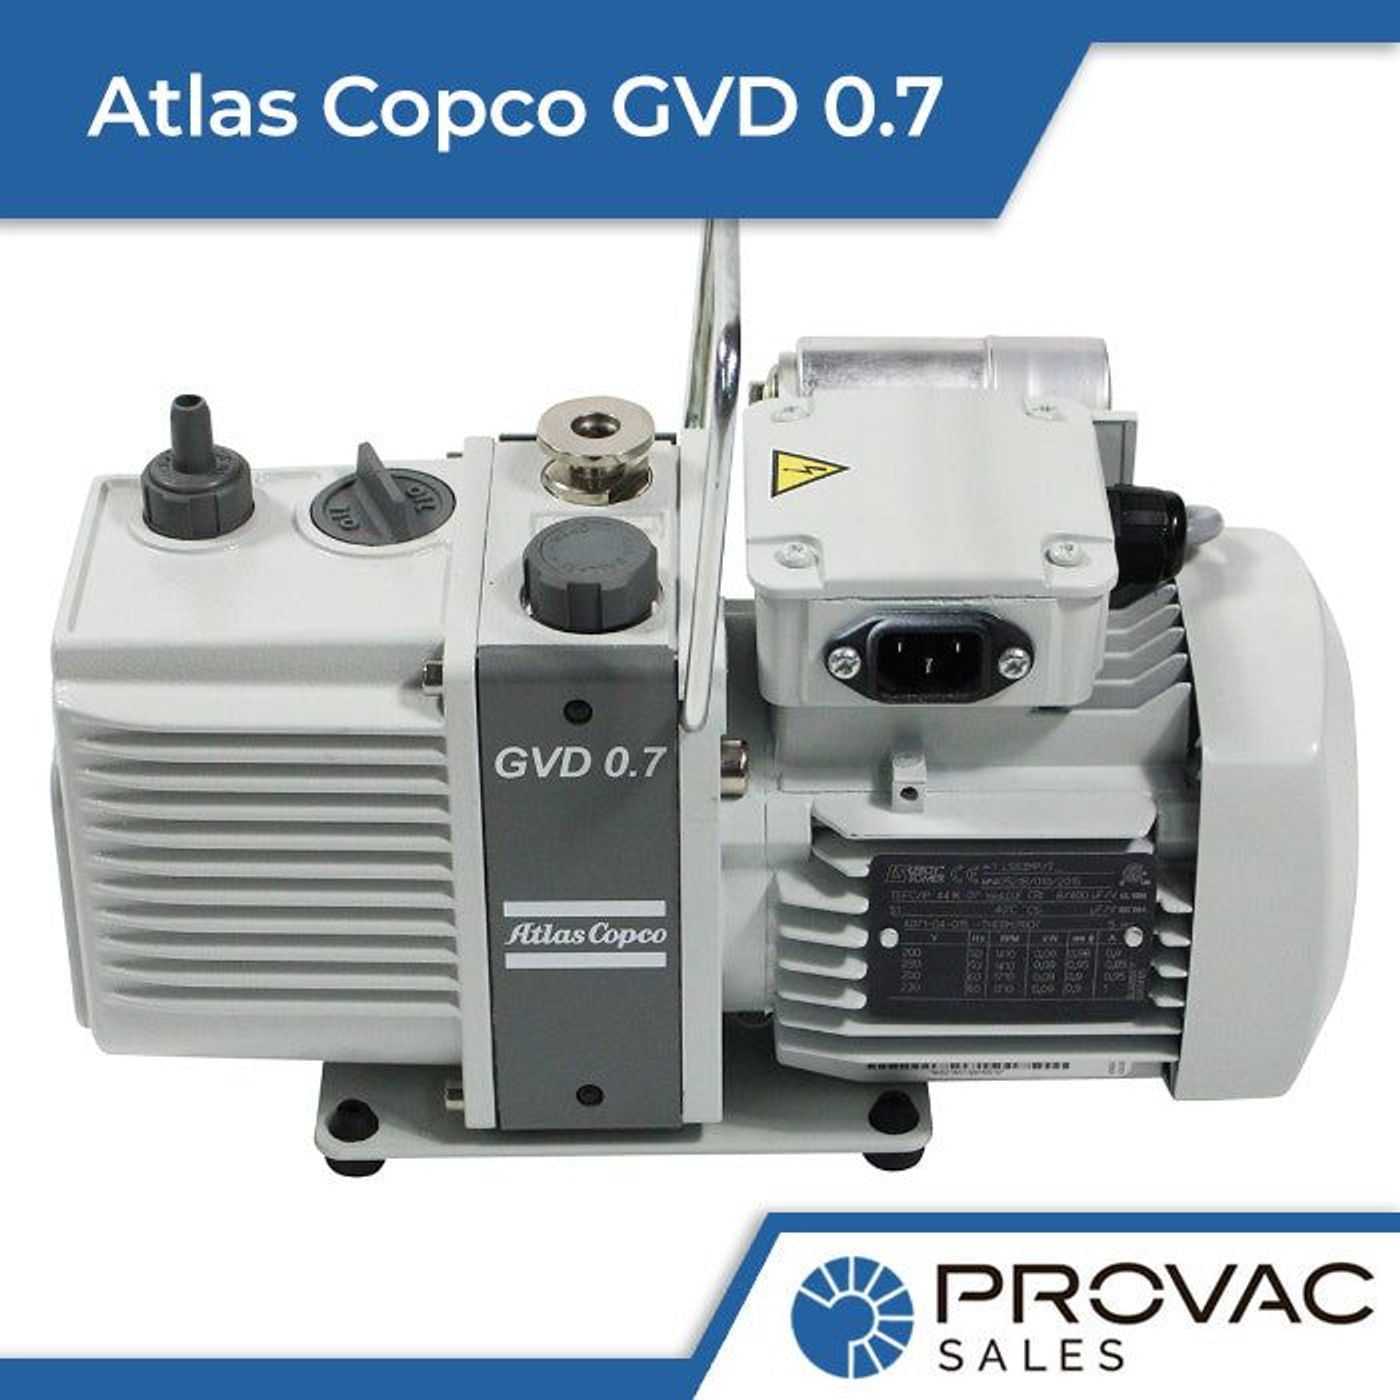 On Sale Now: Atlas Copco GVD 0.7 Rotary Vane Pump